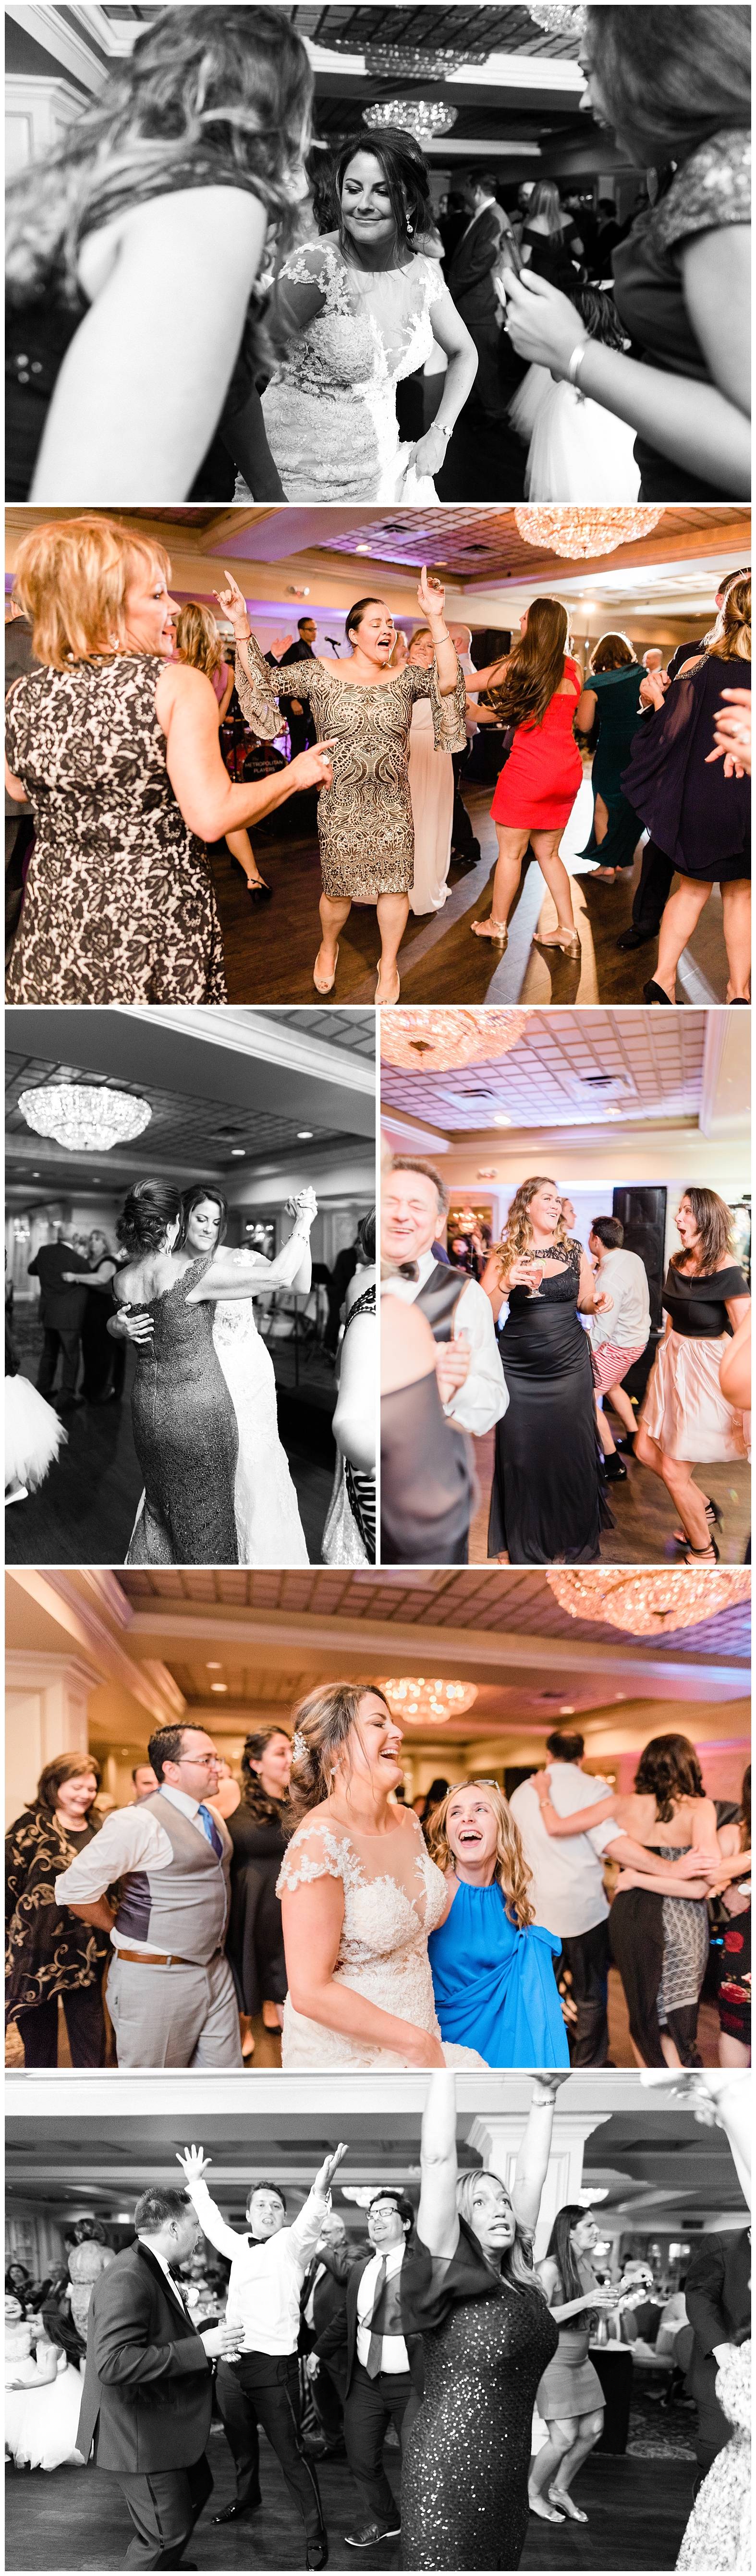 Band, Dance Floor, Morristown, New Jersey, NJ, Olde Mill Inn, Party, Photo, Photographer, Reception, Wedding